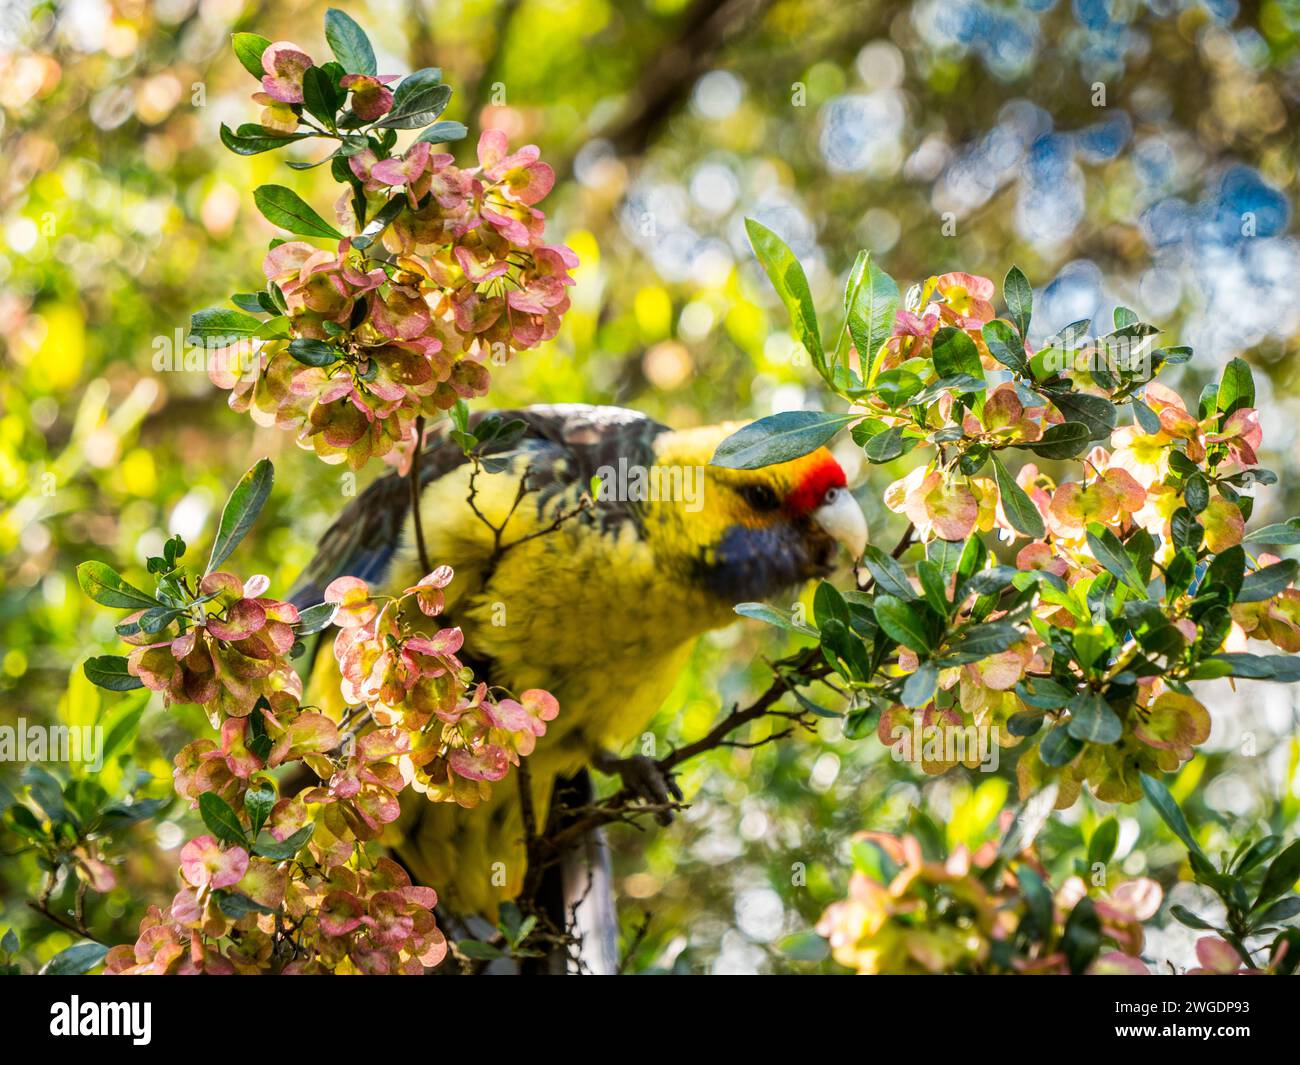 Green rosella parrot in Tasmania Stock Photo